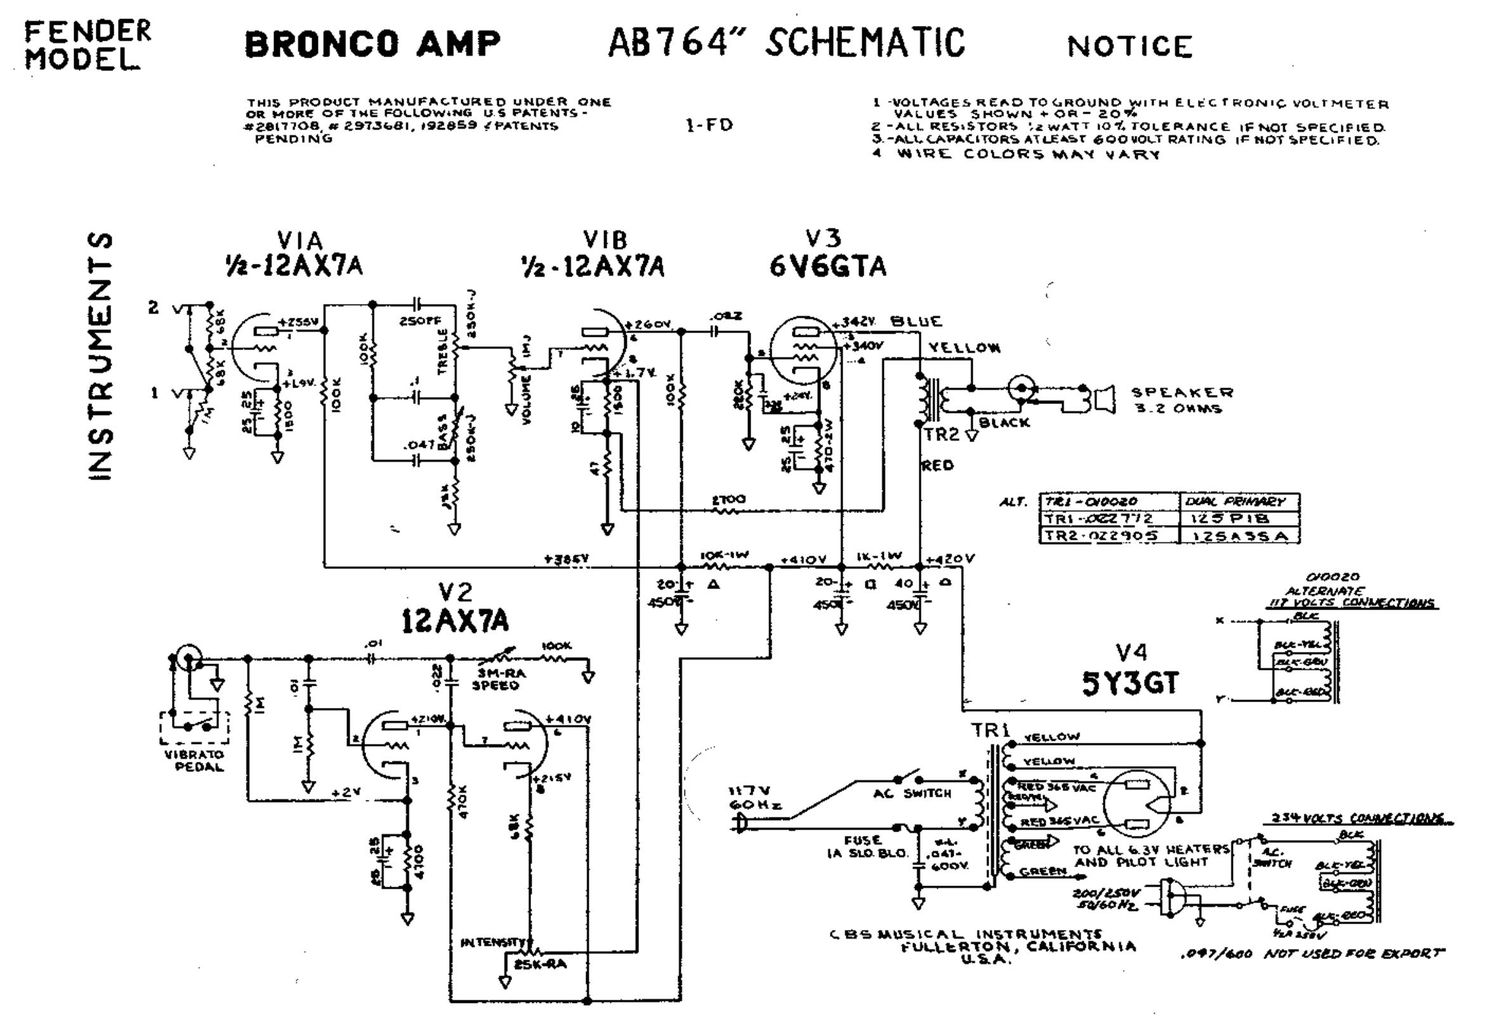 fender bronco ab764 schematic